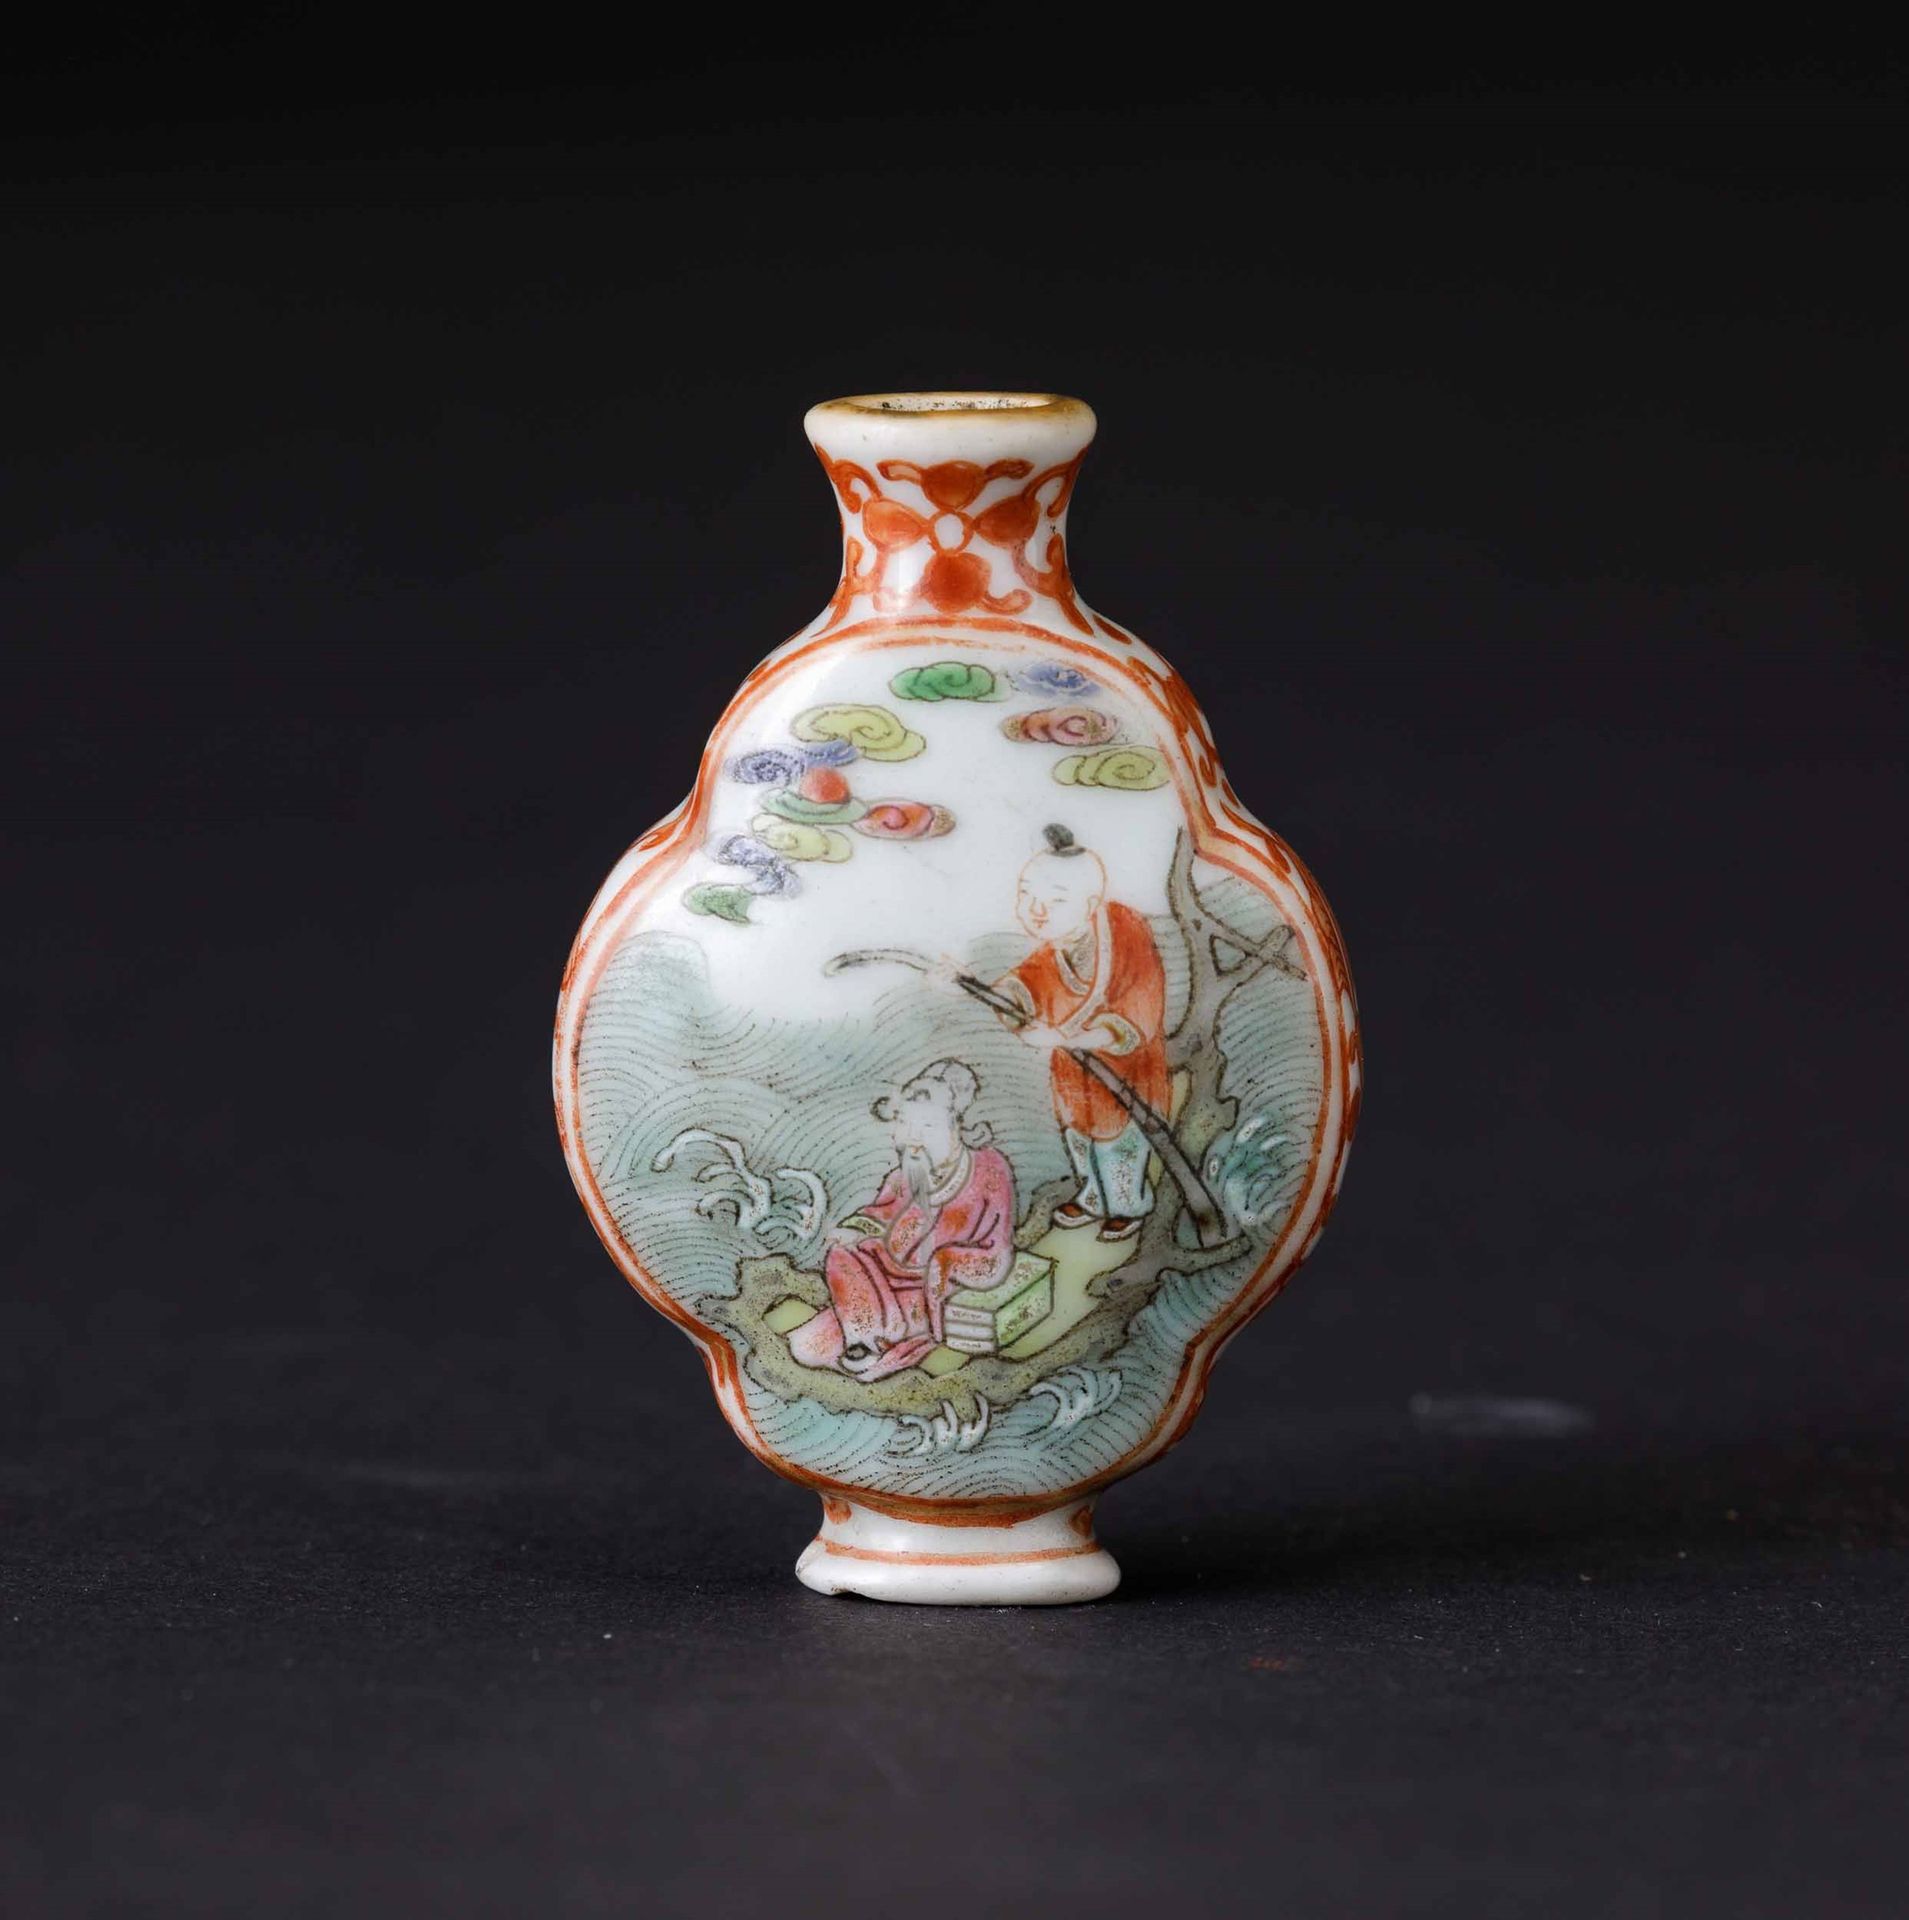 A porcelain snuff bottle, China, Qing Dynasty Período Jiaqing (1796-1820). H 6cm